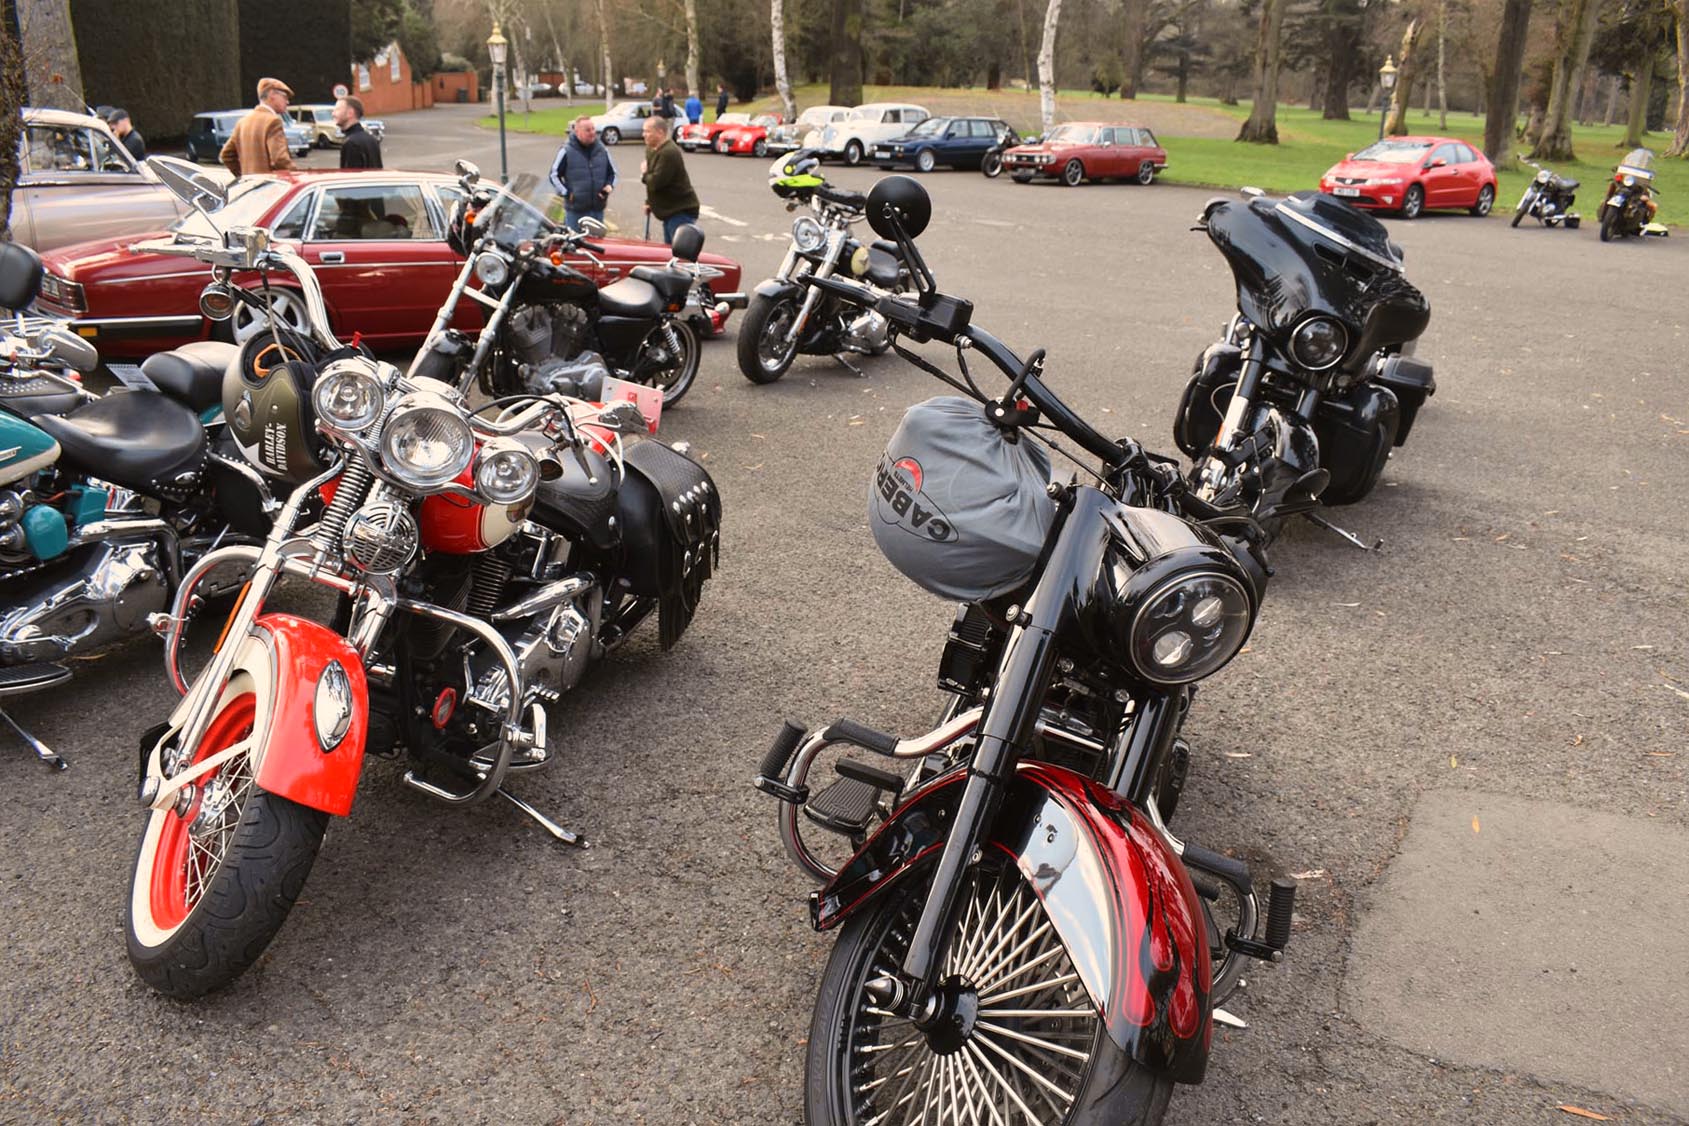 Harley Davidson group.jpg